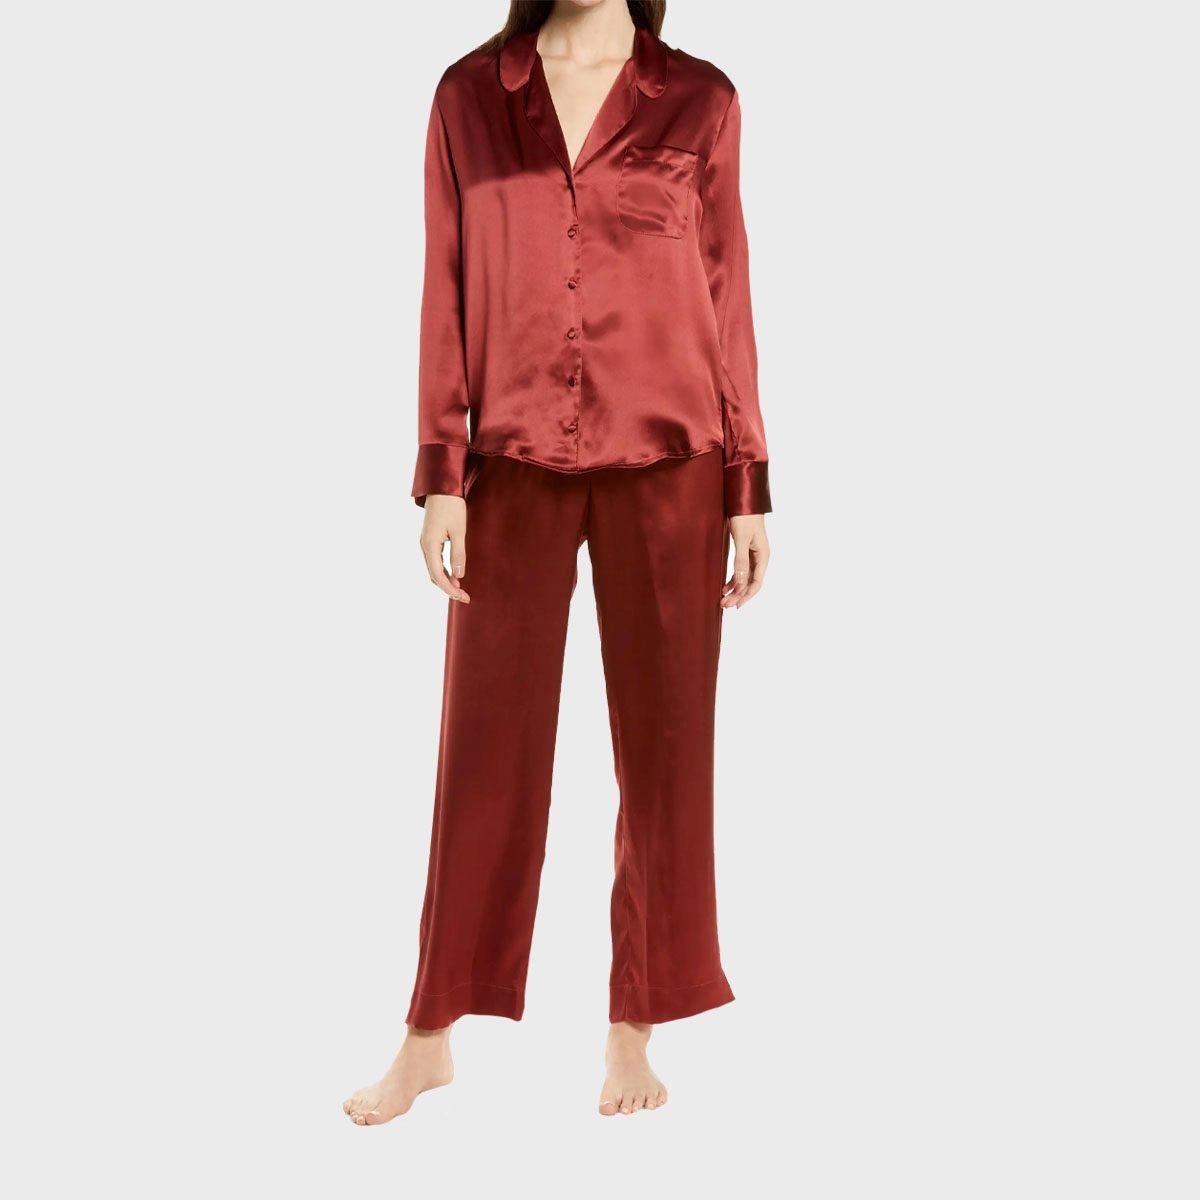 Reader's Digest | 25 Women's Silk Pajamas Worth the Splurge 2022